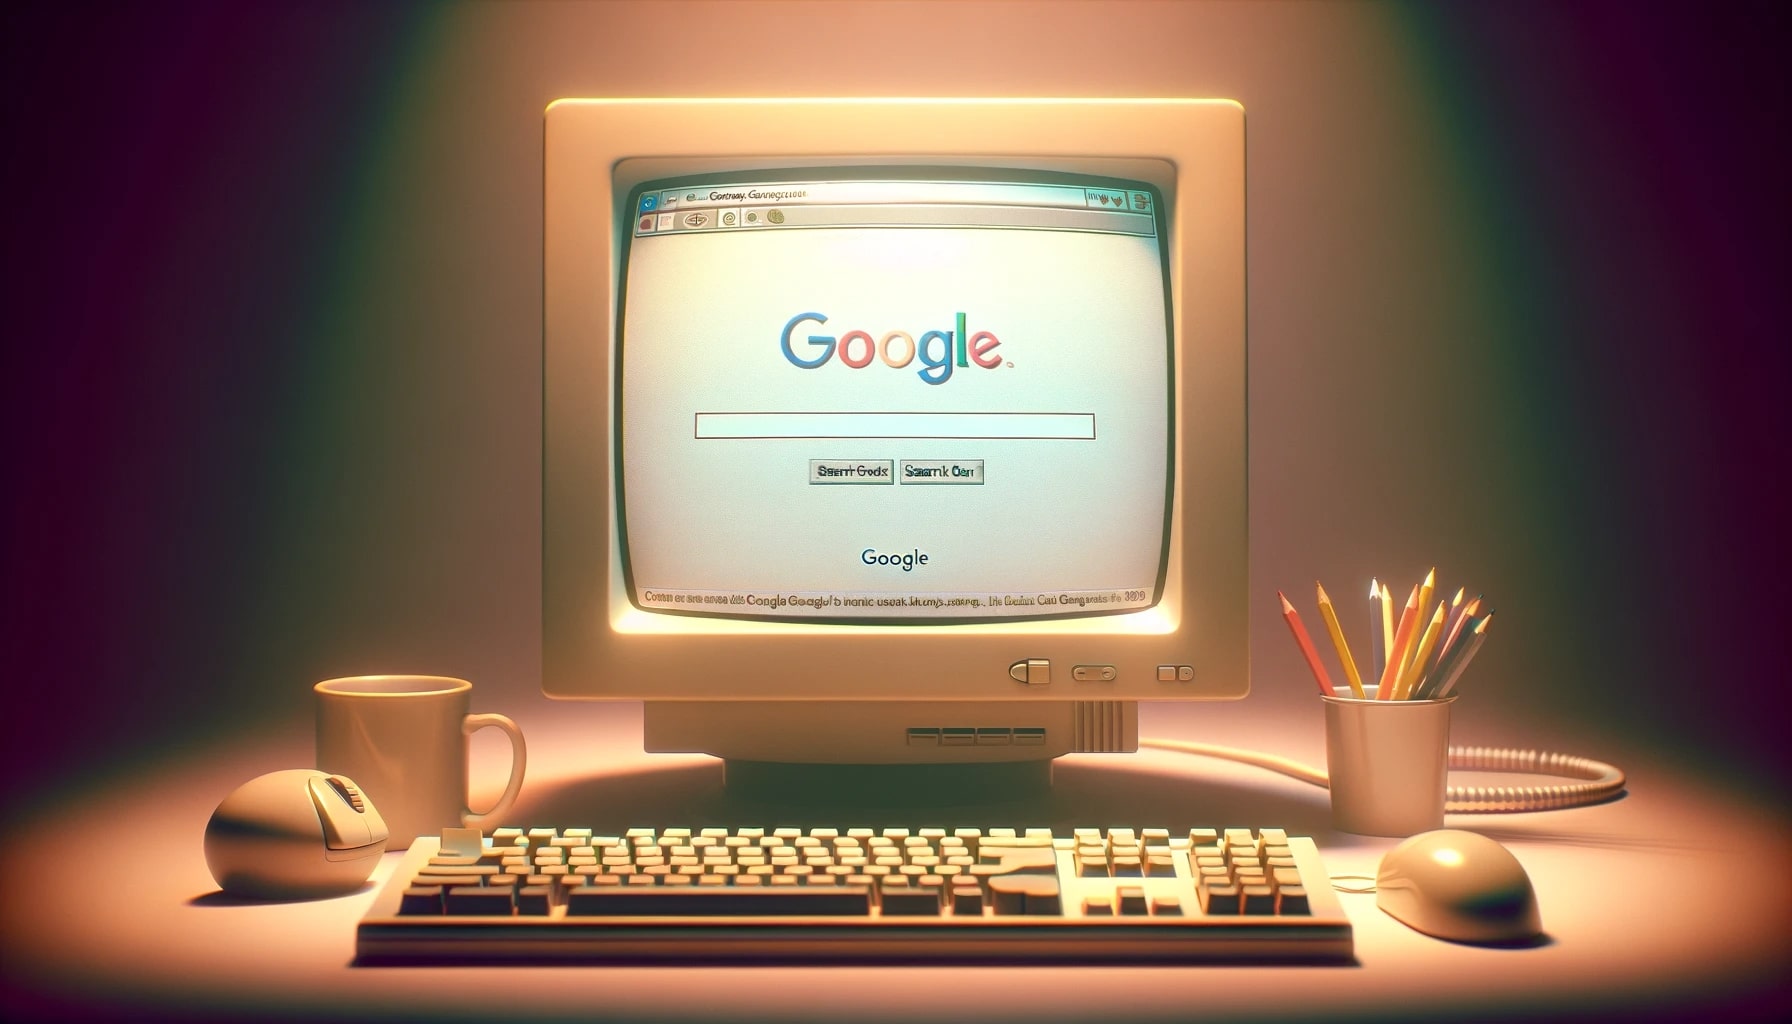 Google search engine history